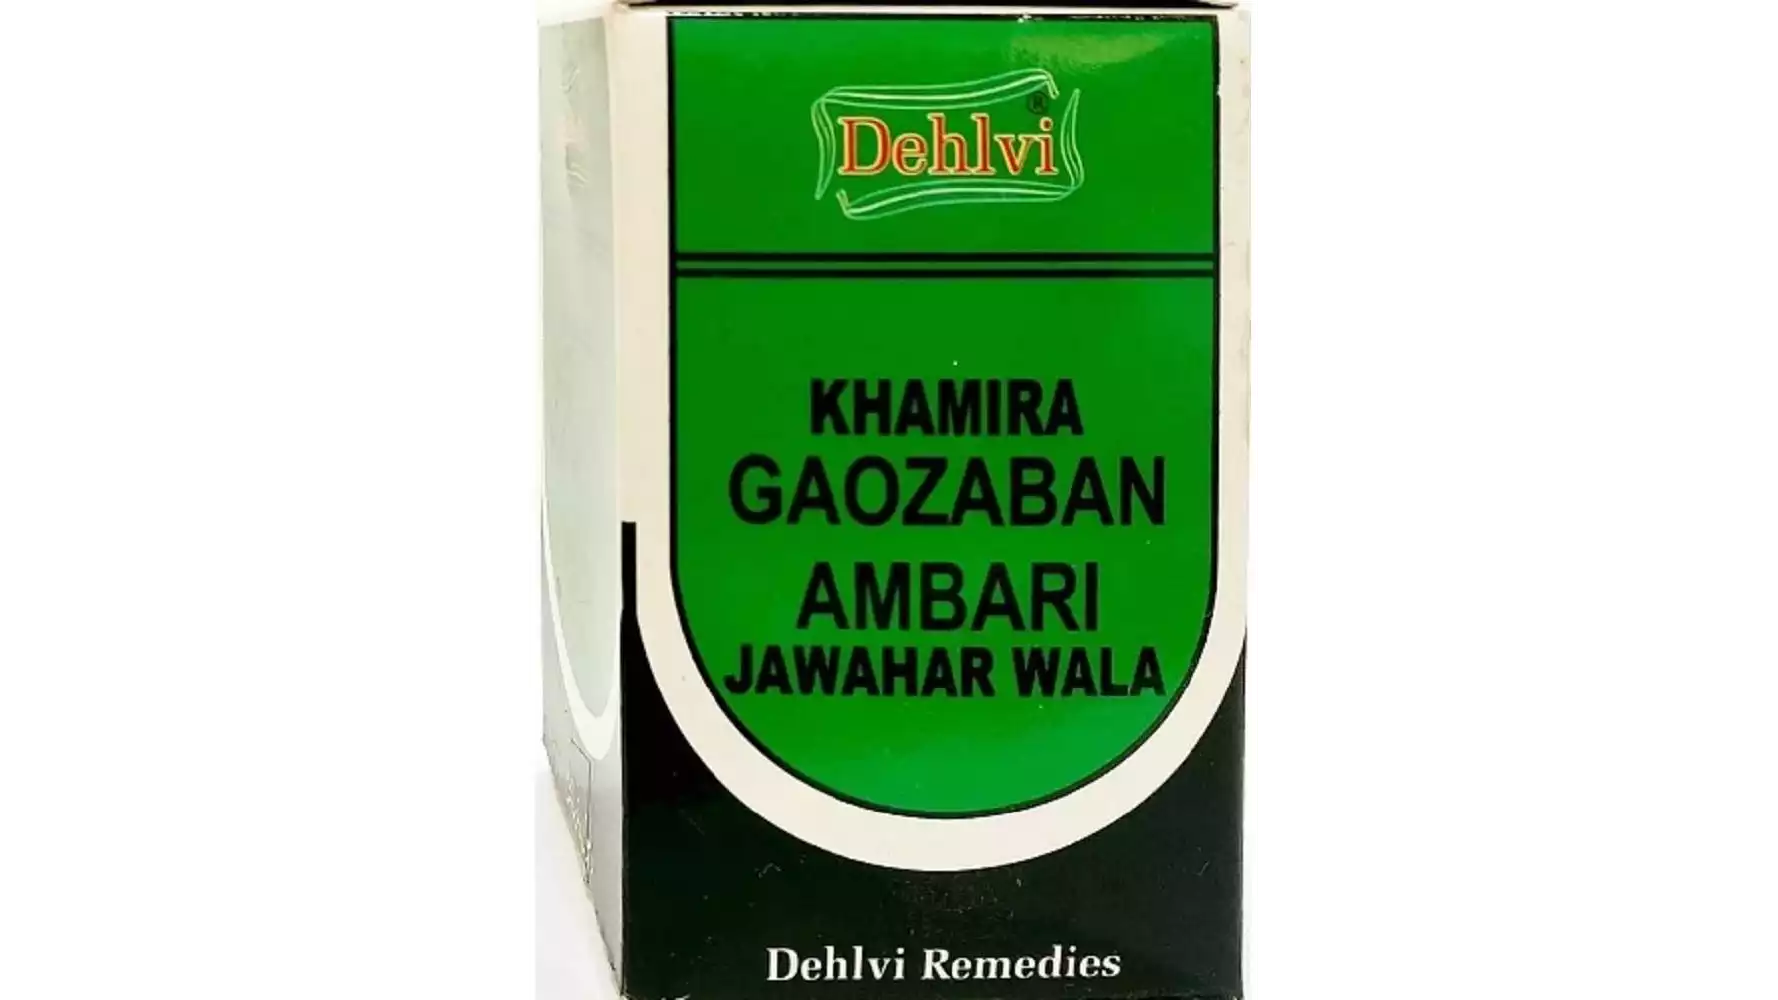 Dehlvi Remedies Khamira Gawzaban Ambari Jawahar Wala (1000g)